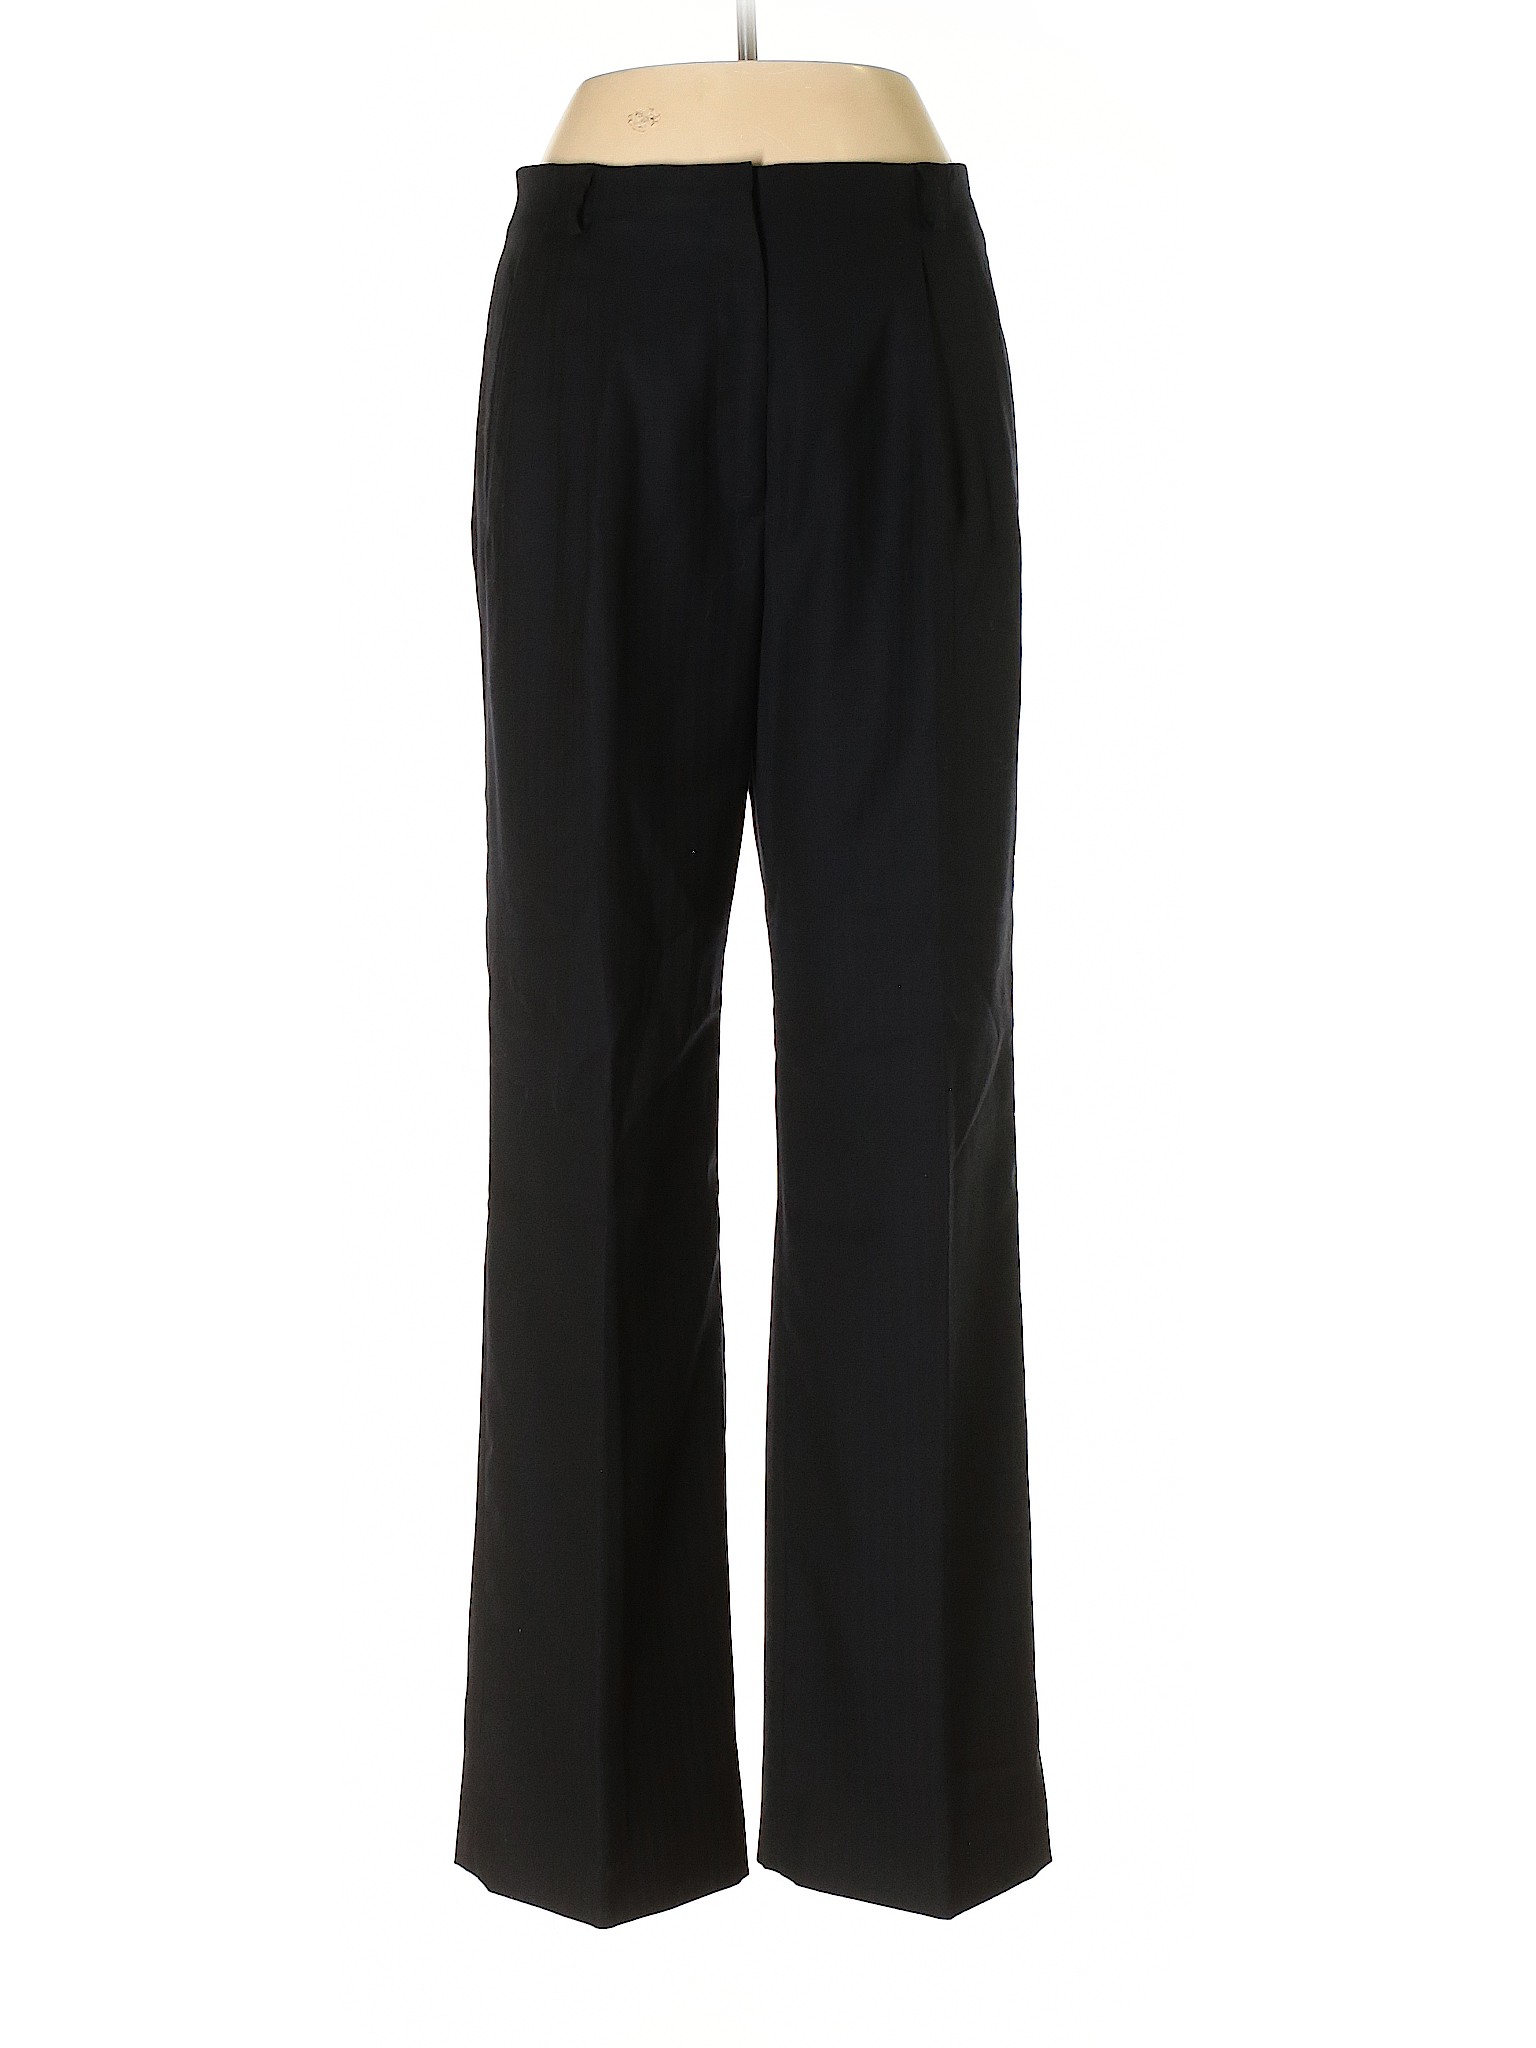 Austin Reed Women Black Wool Pants 8 | eBay